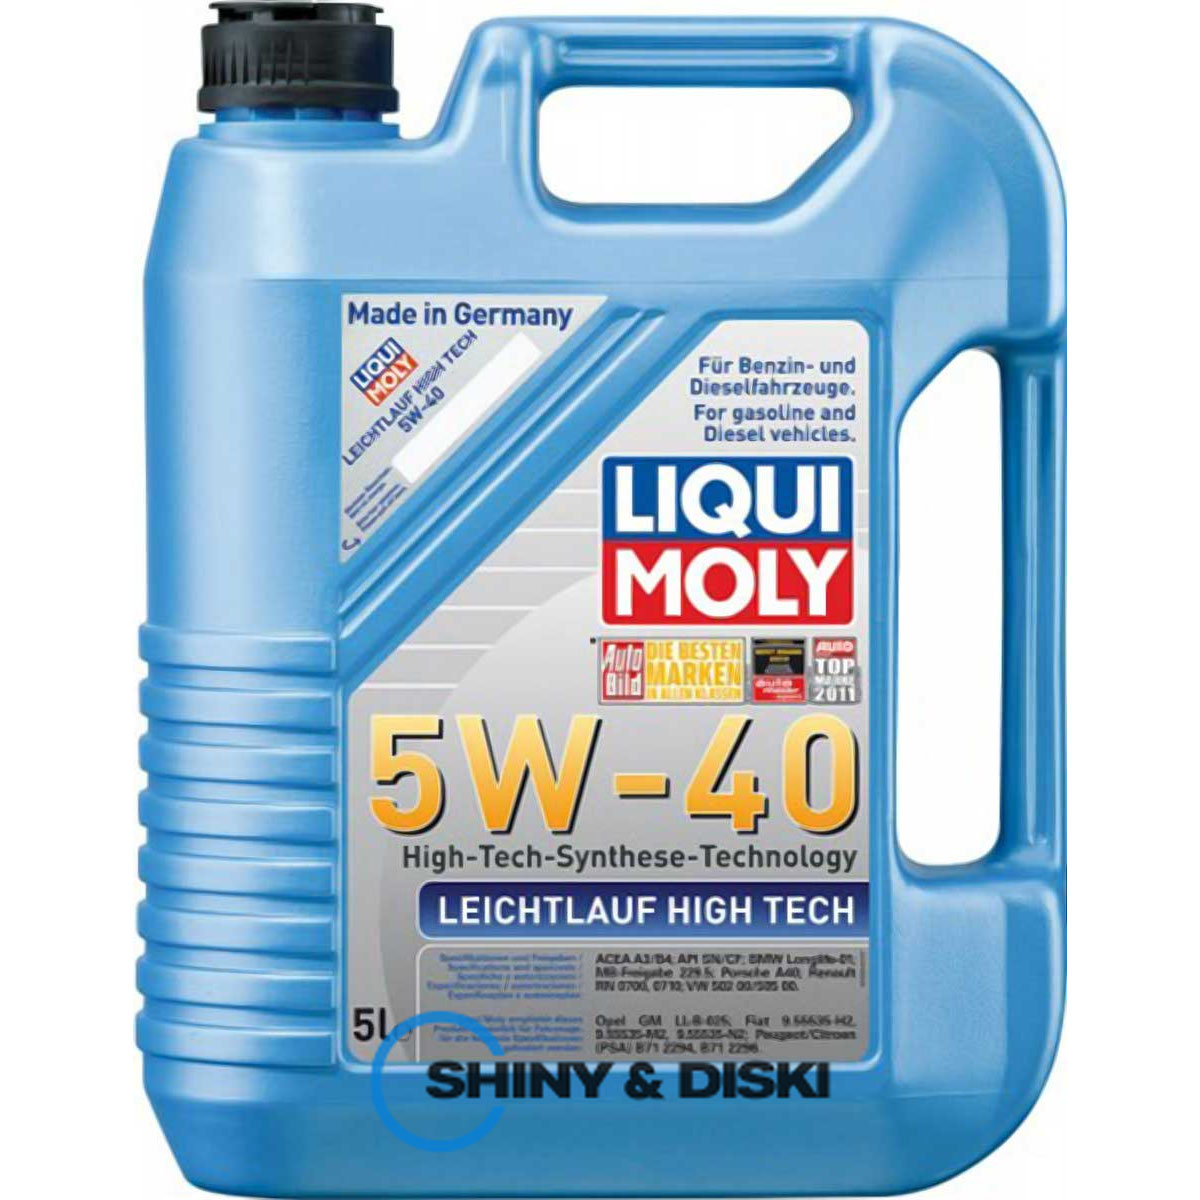 liqui moly leichtlauf high tech 5w-40 (5л)